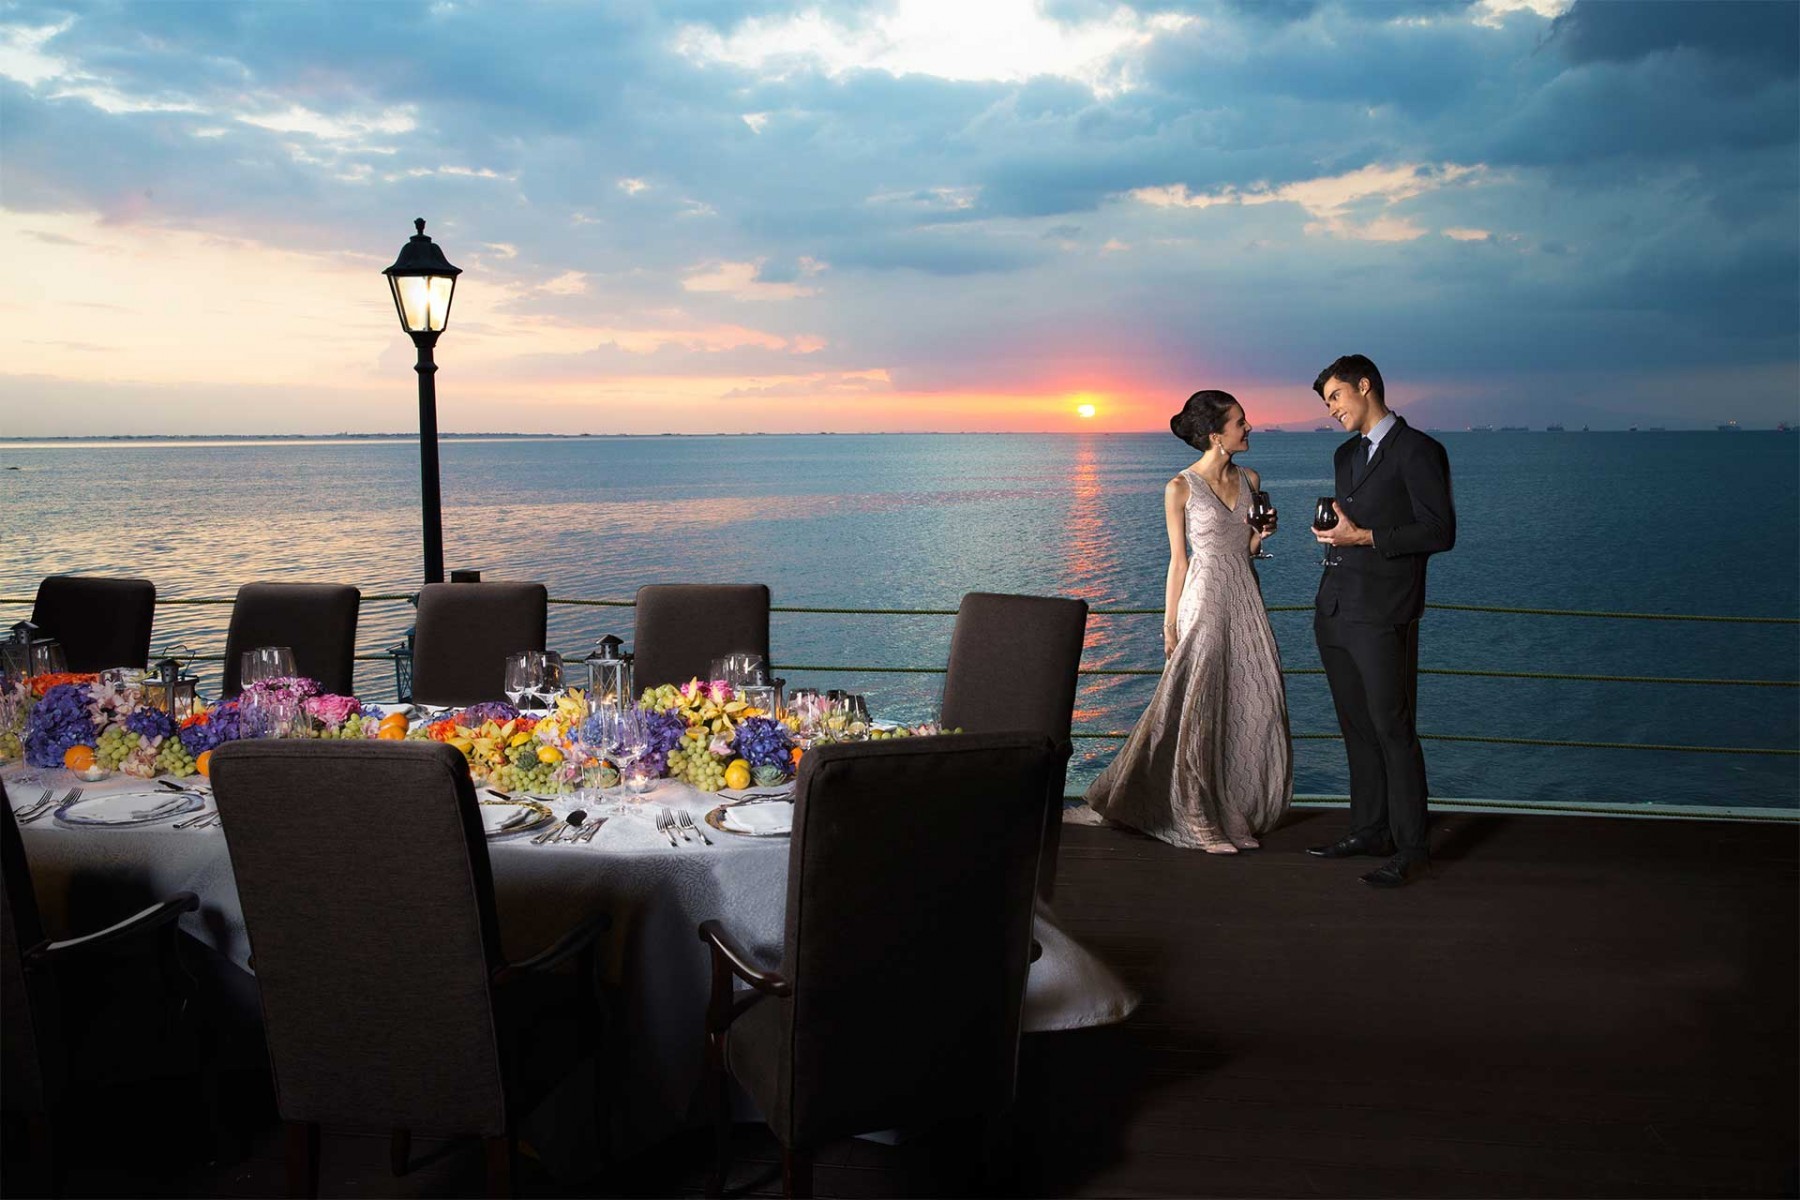 celebrate your wedding reception at the best hotel in manila - sofitel hotel